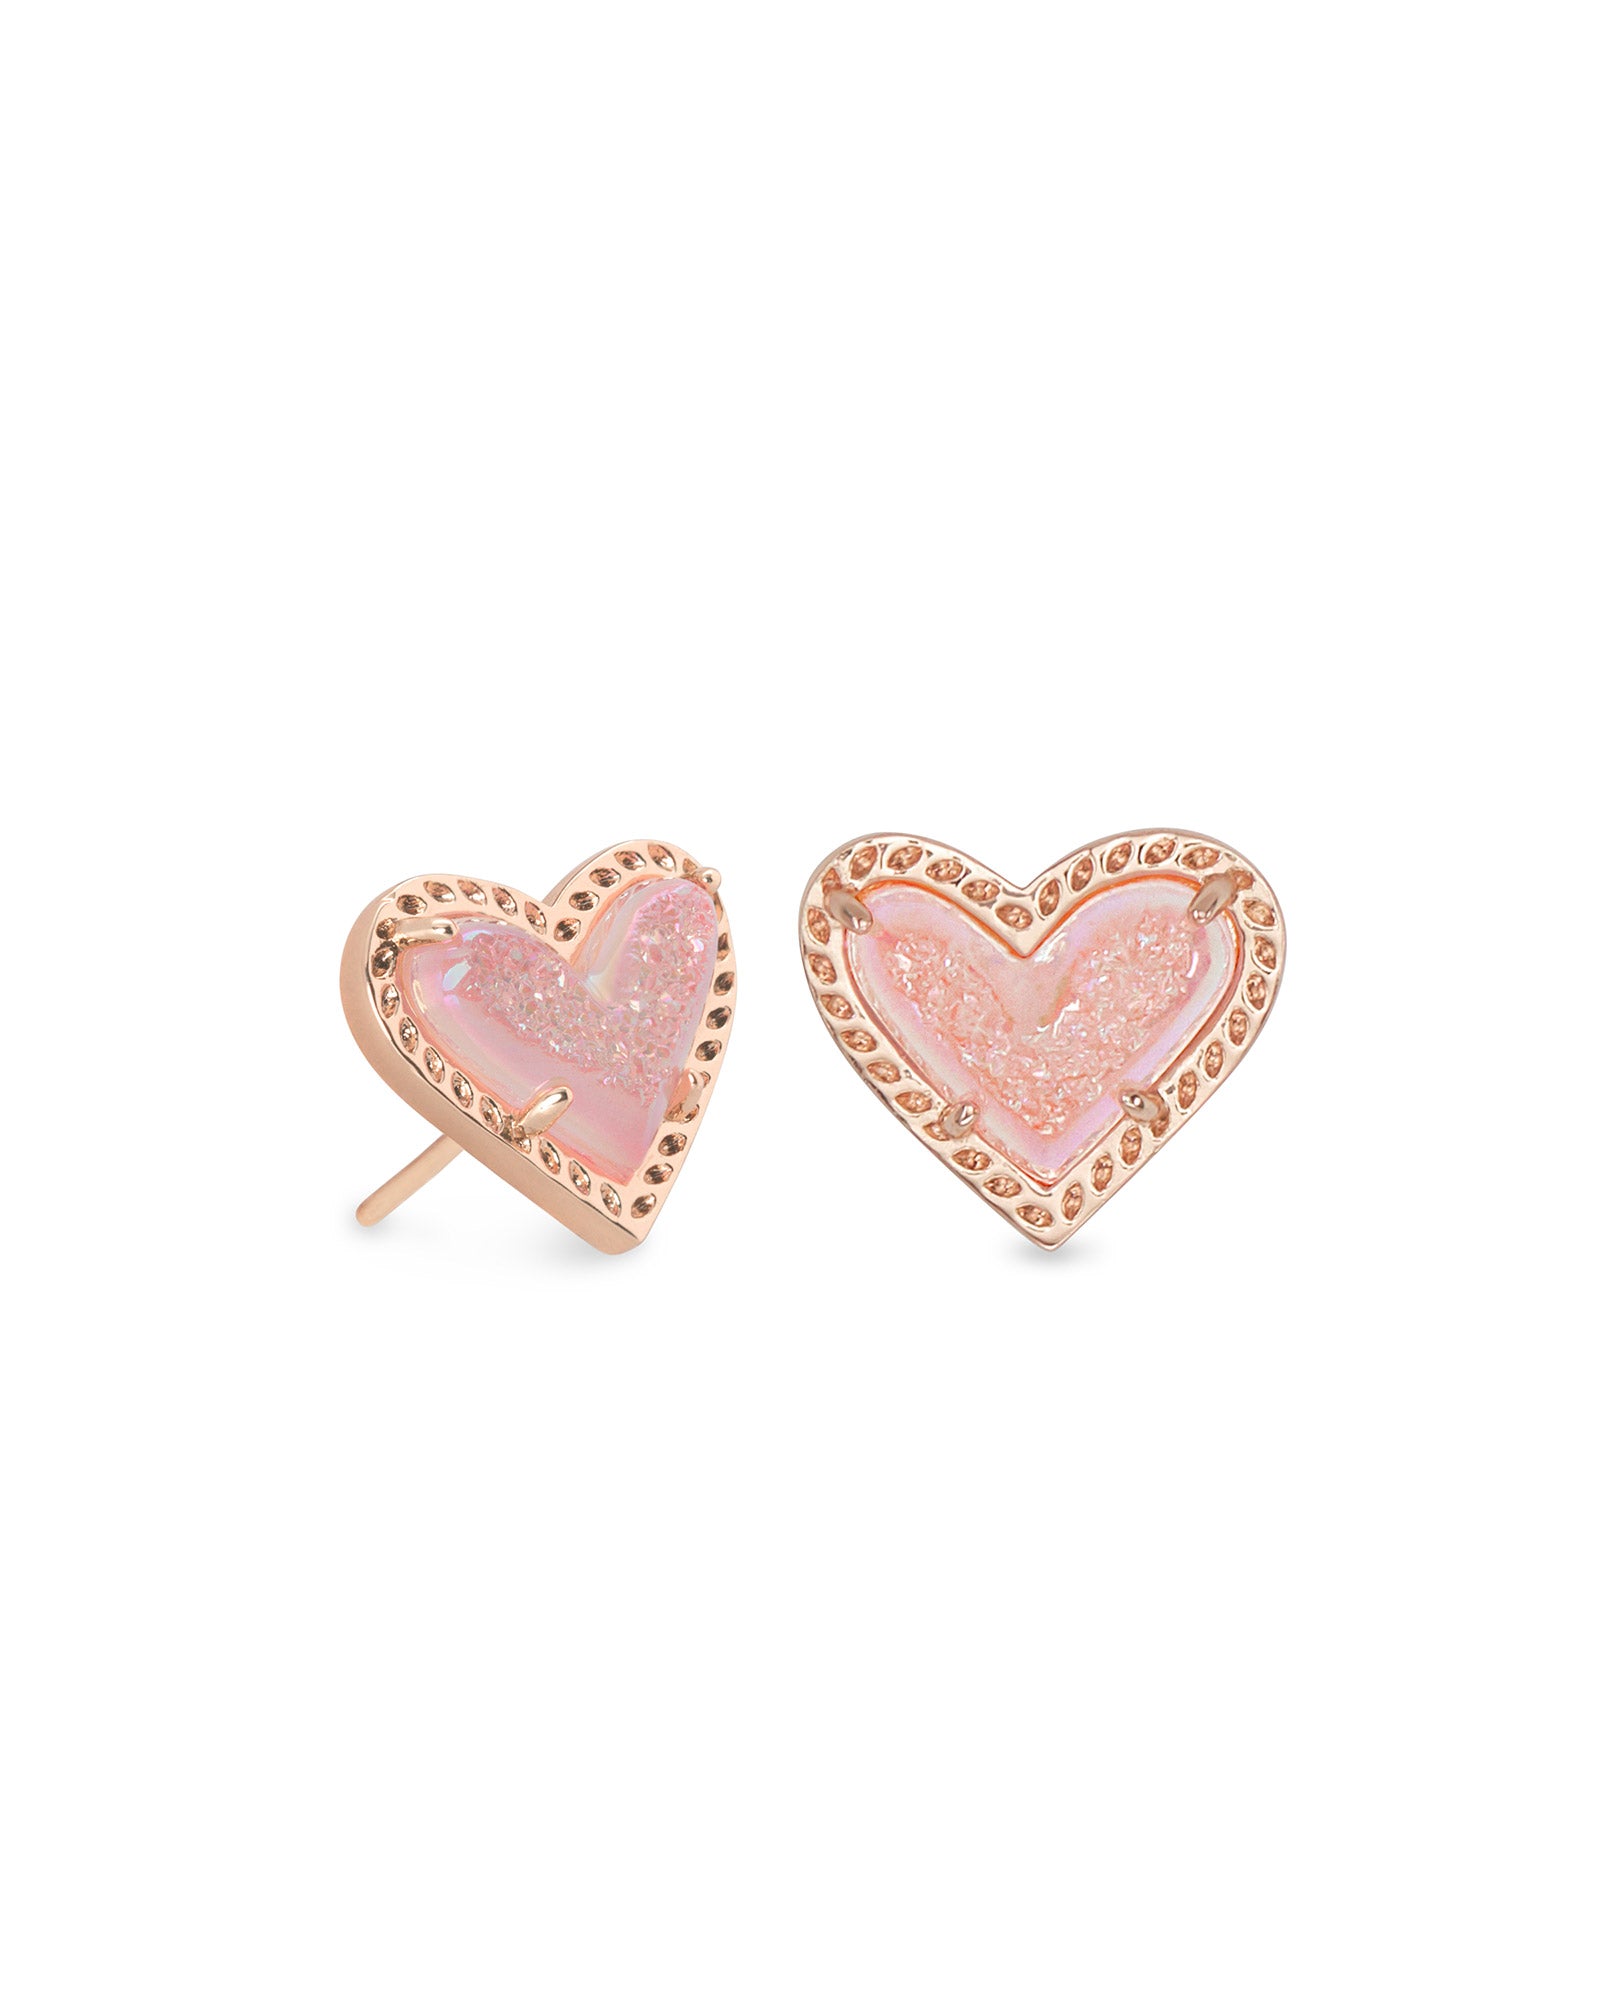 Ari Heart Rose Gold Stud Earring in Pink Drusy